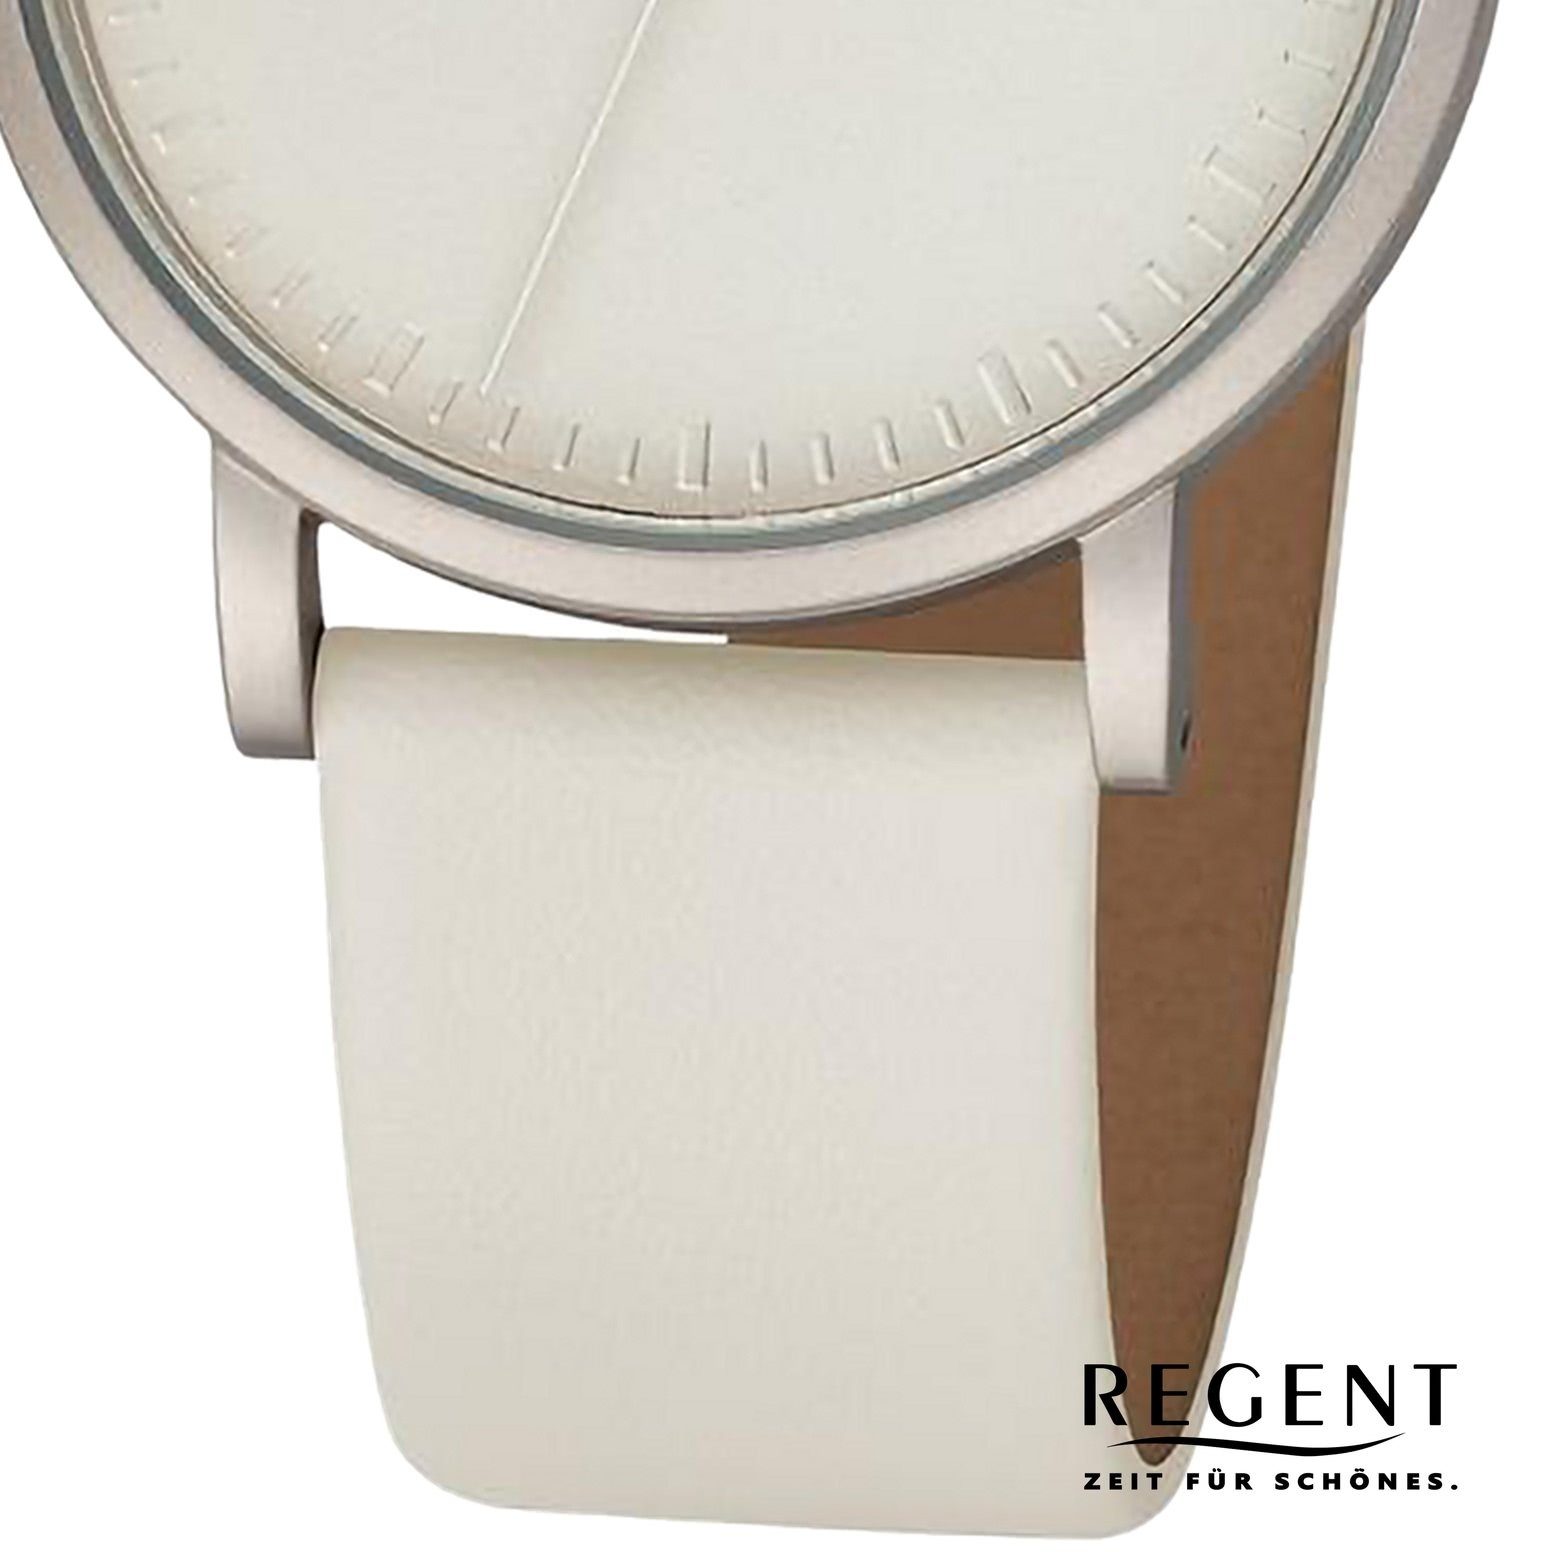 36mm), Analog, (ca. Armbanduhr rund, Damen Quarzuhr Damen Lederarmband groß Regent Armbanduhr Regent extra